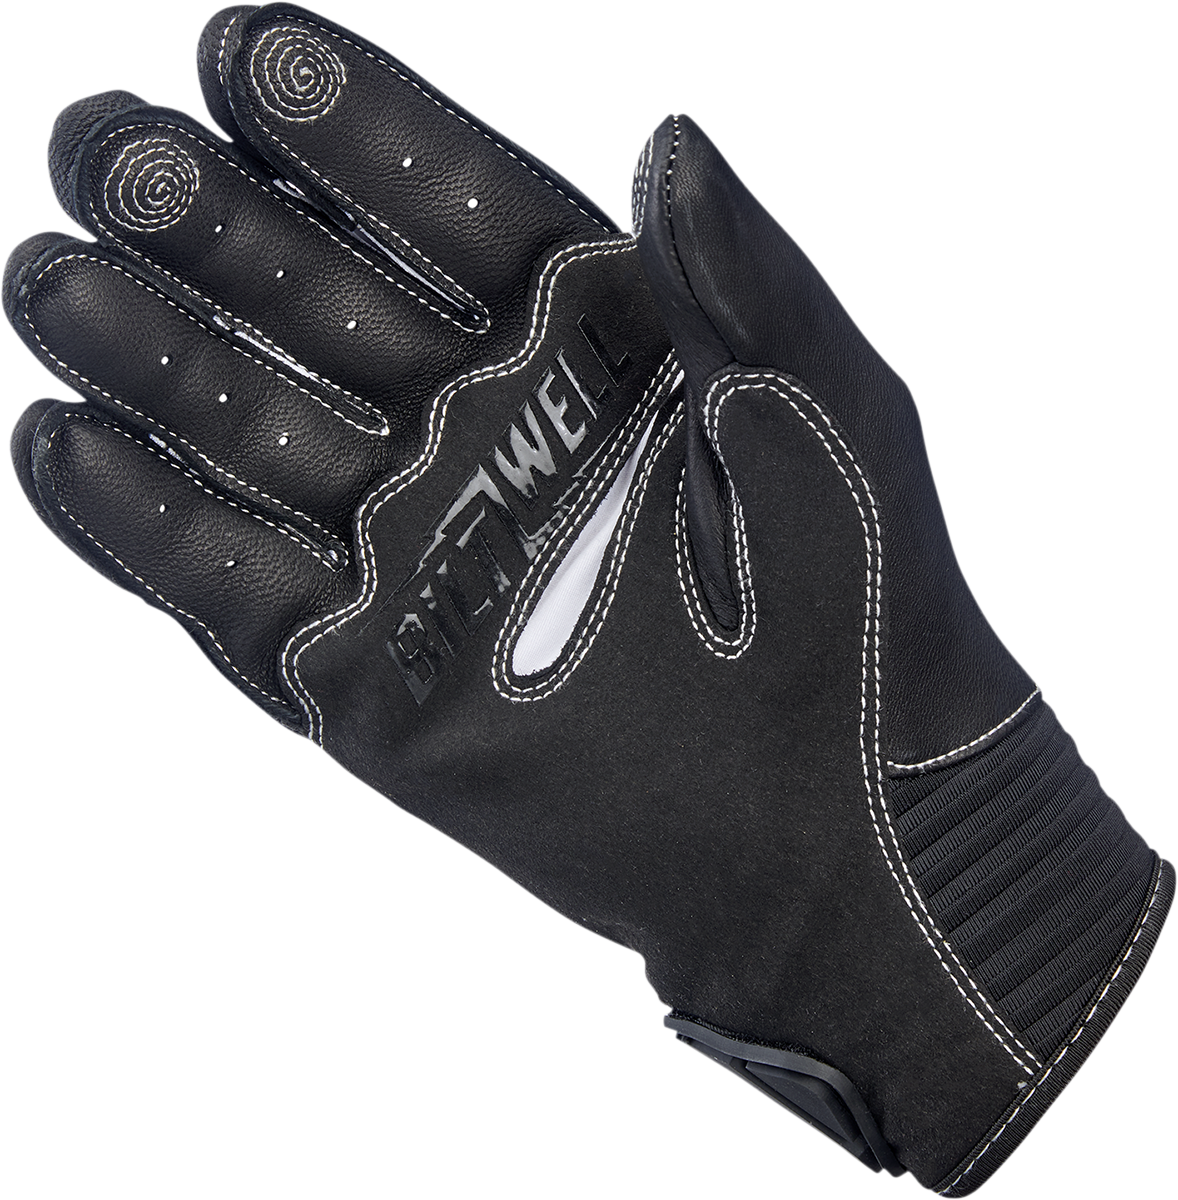 BILTWELL Bridgeport Gloves - Tan - 2XL 1509-0901-306